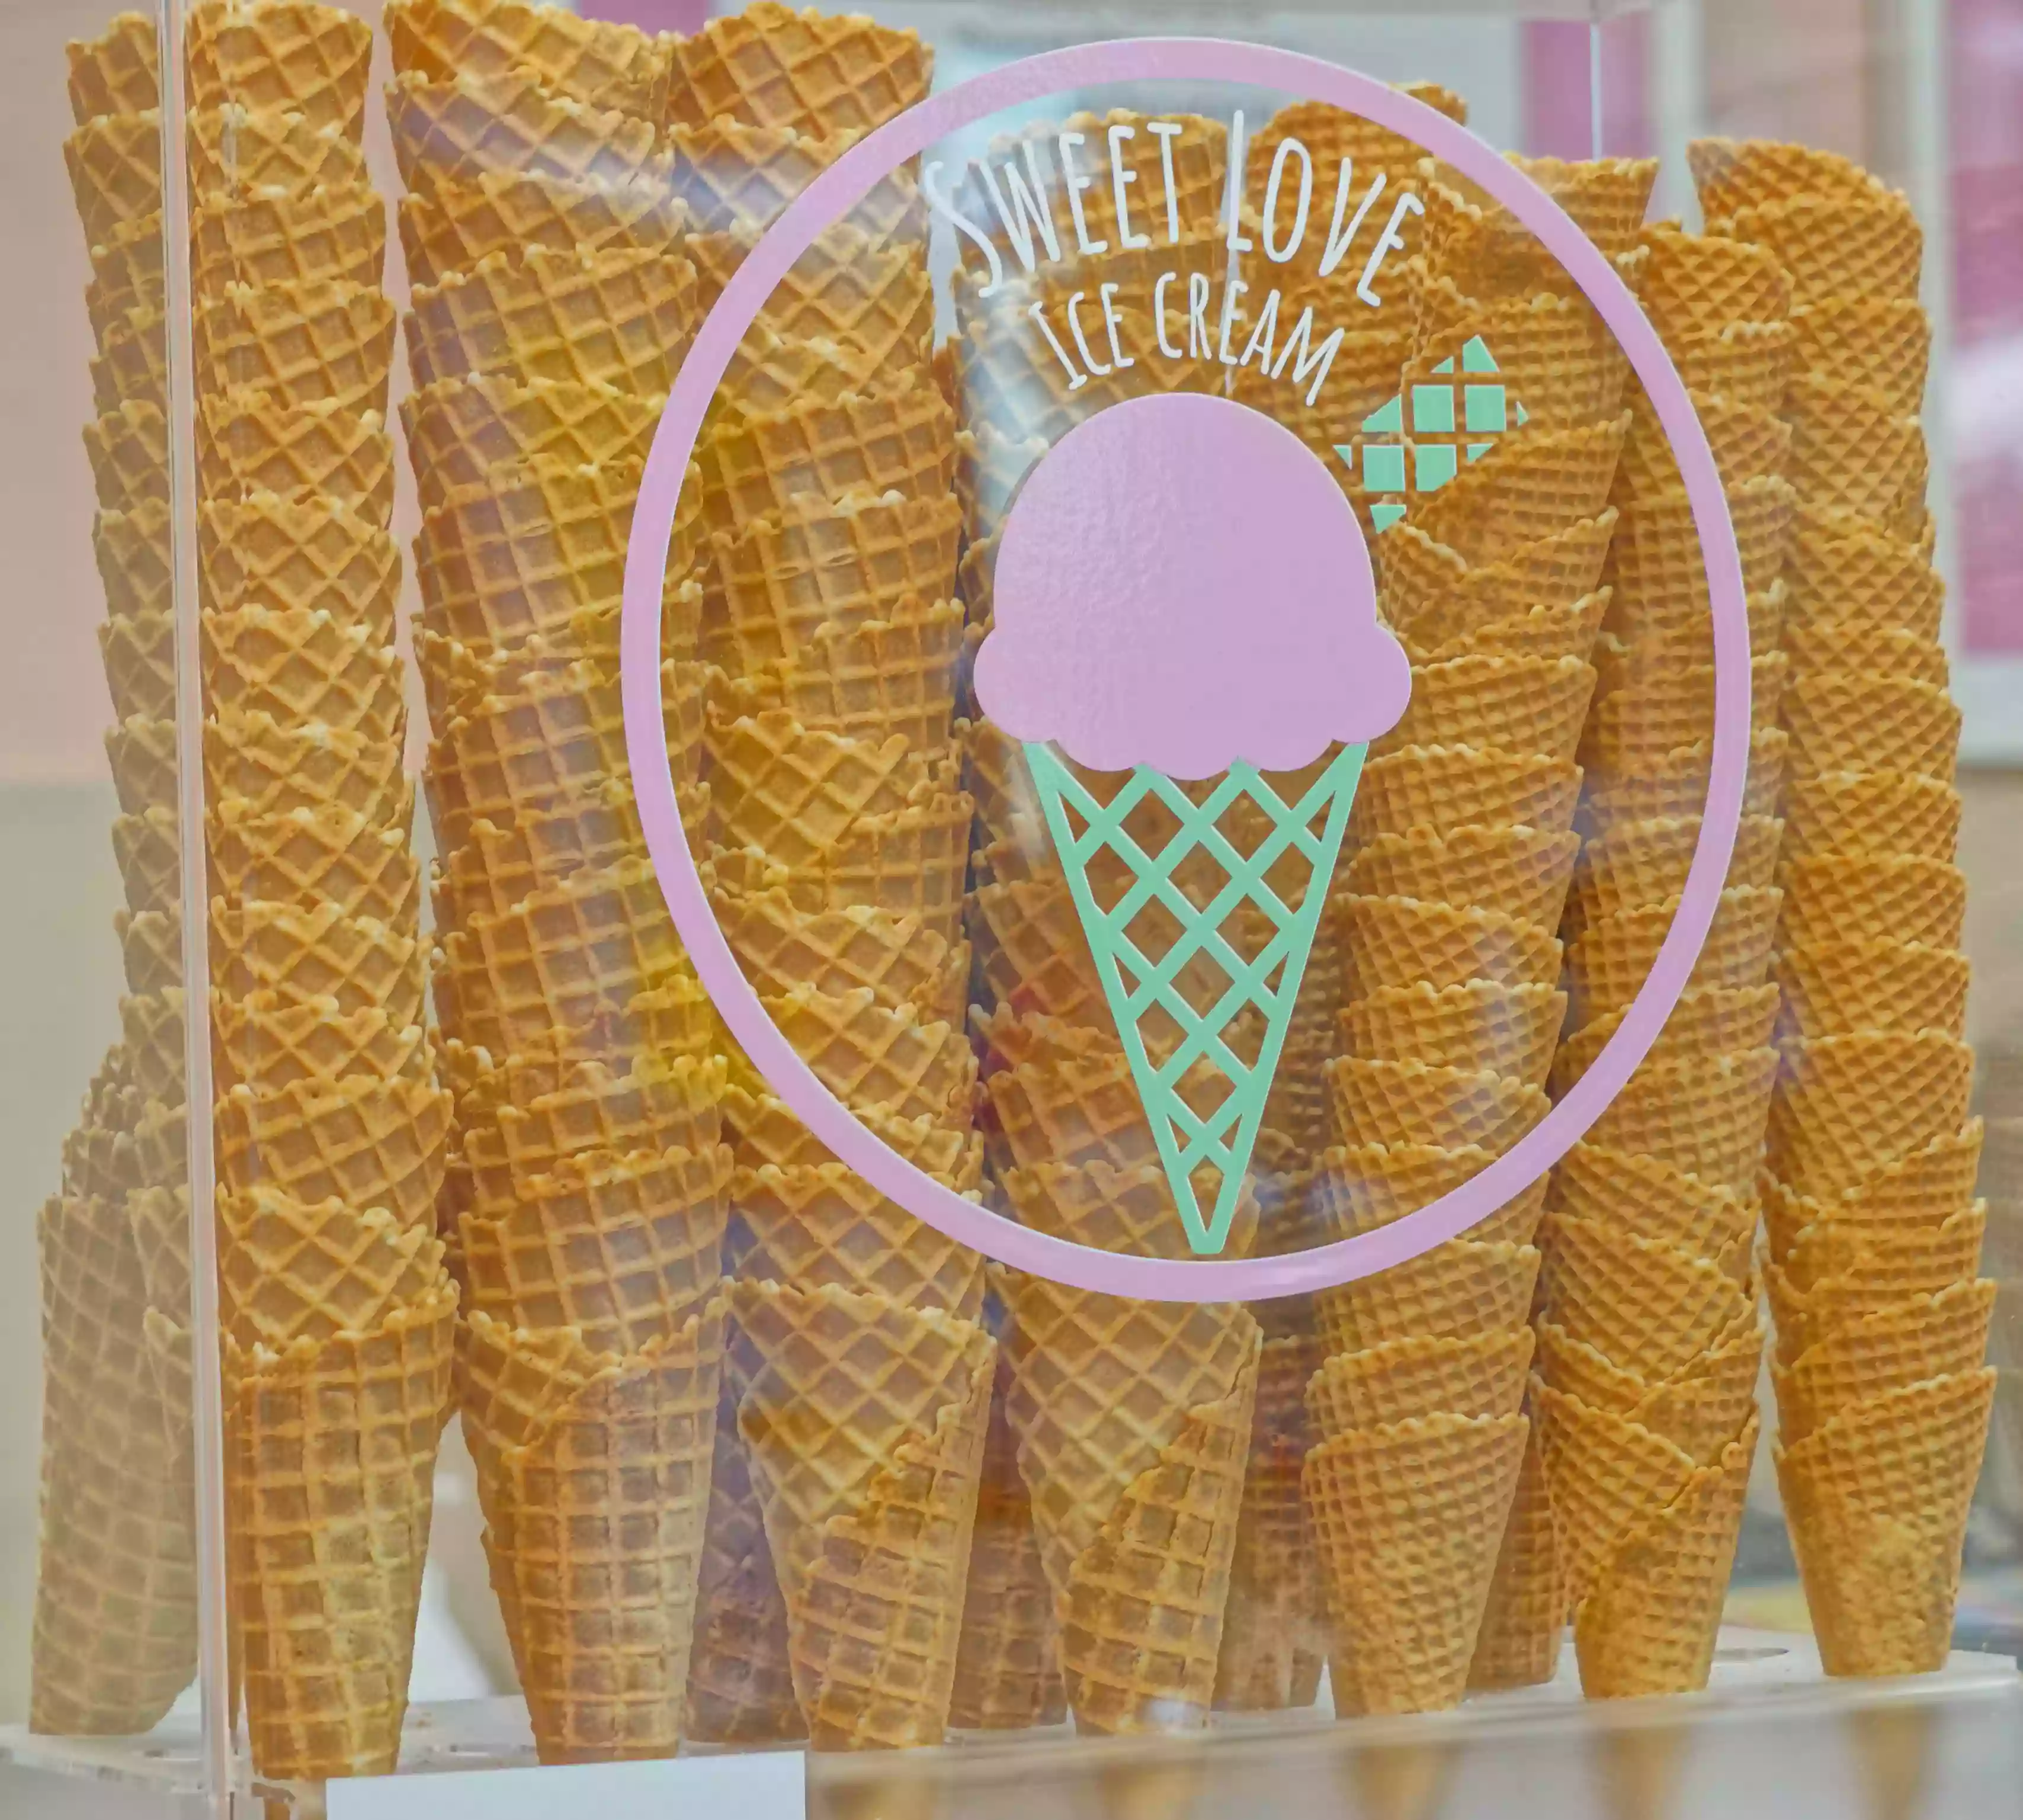 Sweet Love Ice Cream Eisautomat